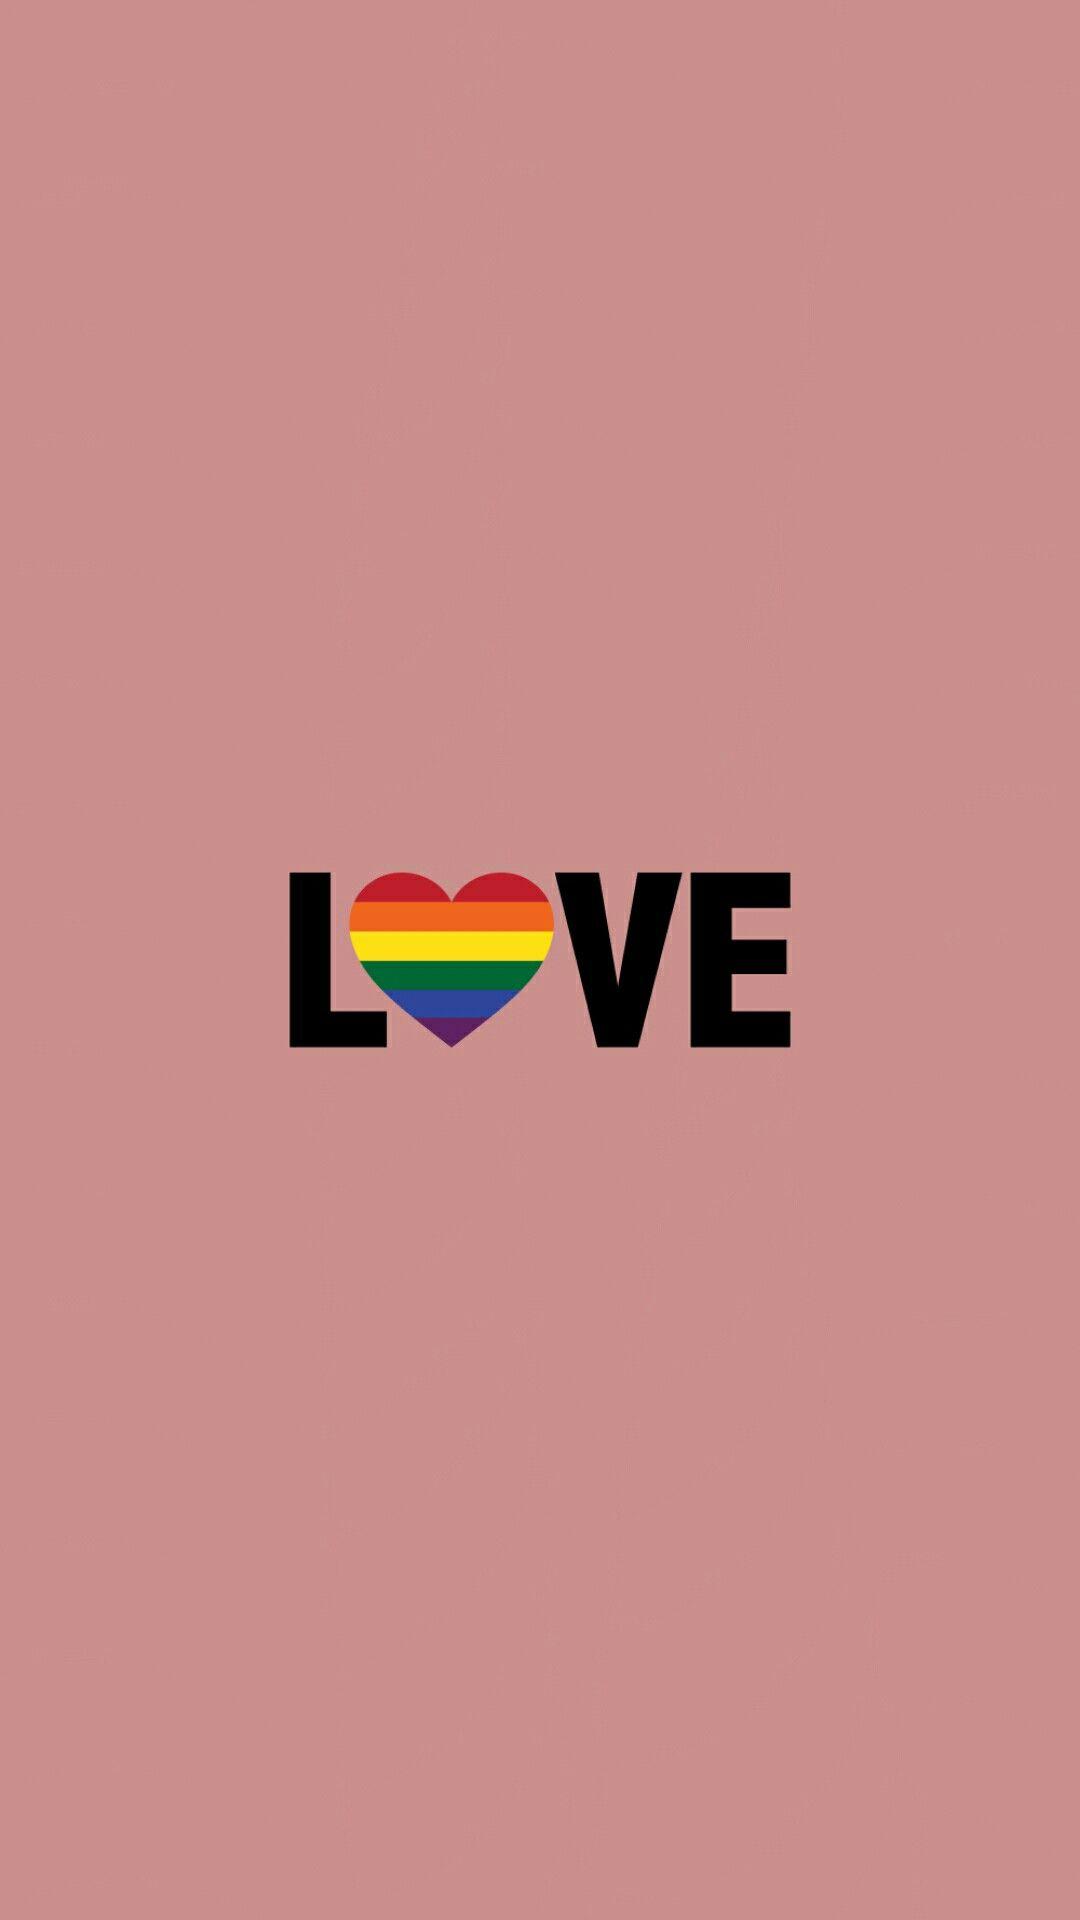 pride / lgbt / gay / lesbian / bi / trans / love is love is love